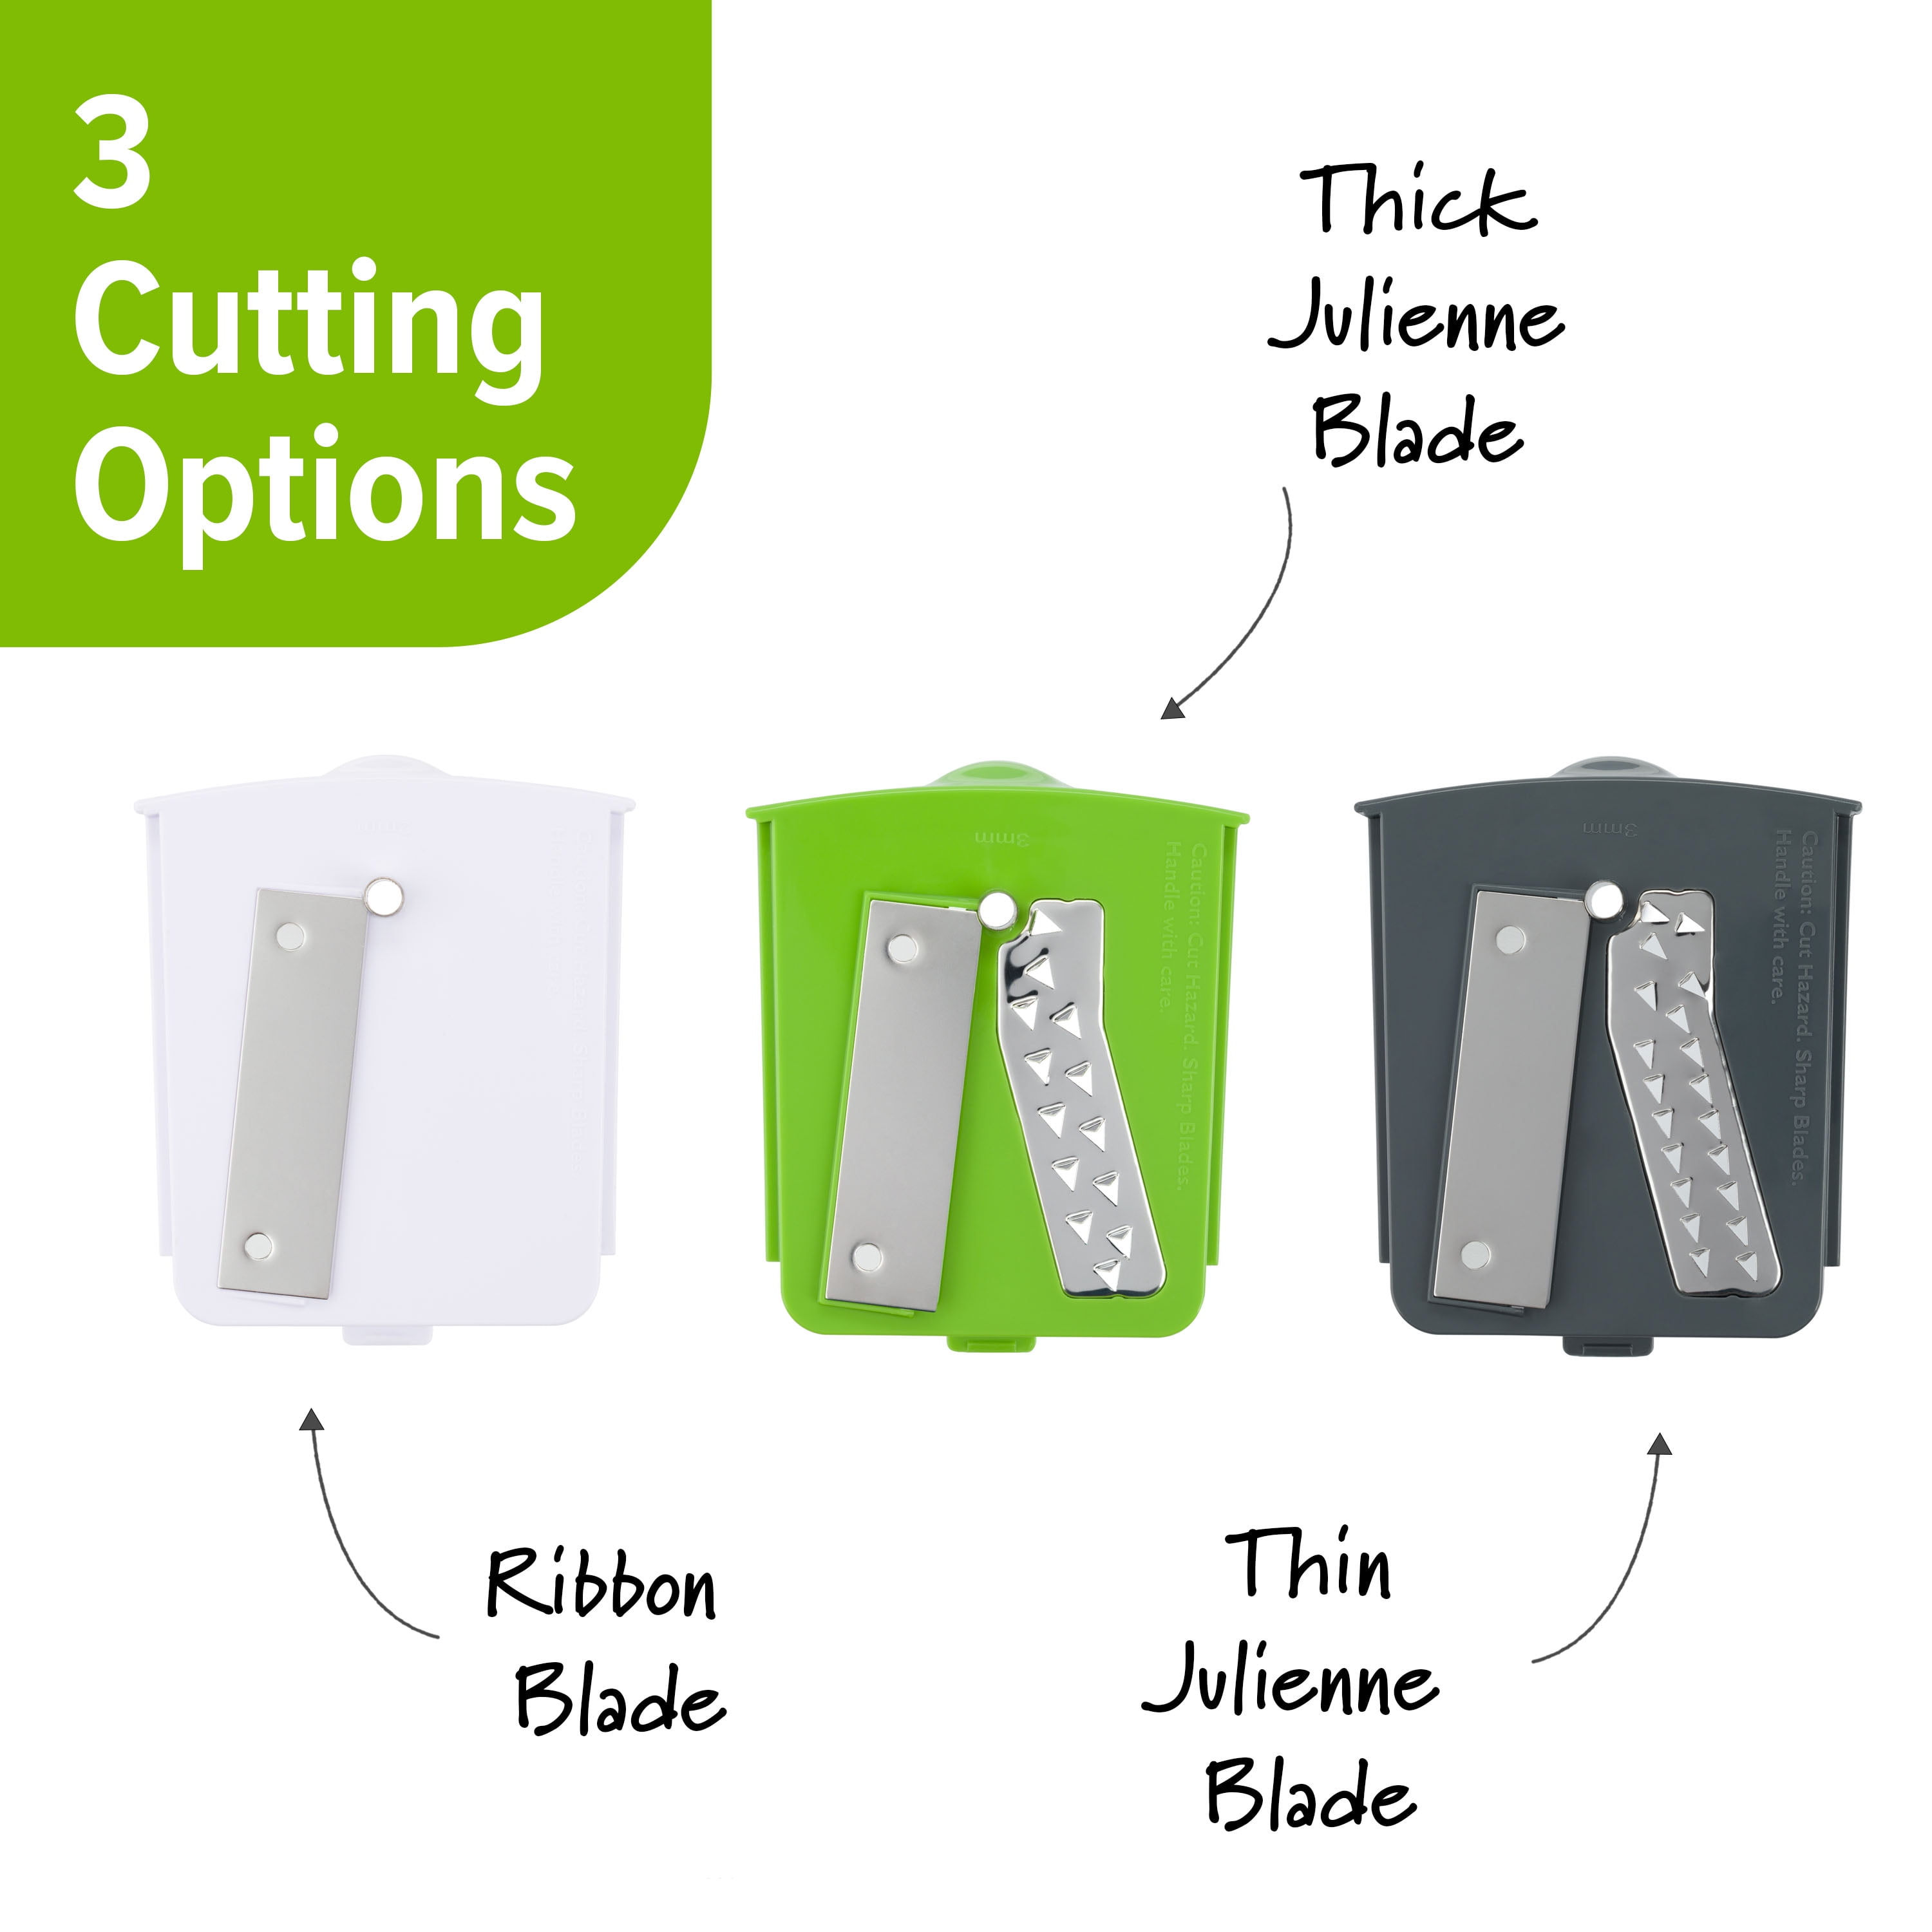 Prep Solutions Kitchen Gadgets Vegetable Slicer, Color: White - JCPenney